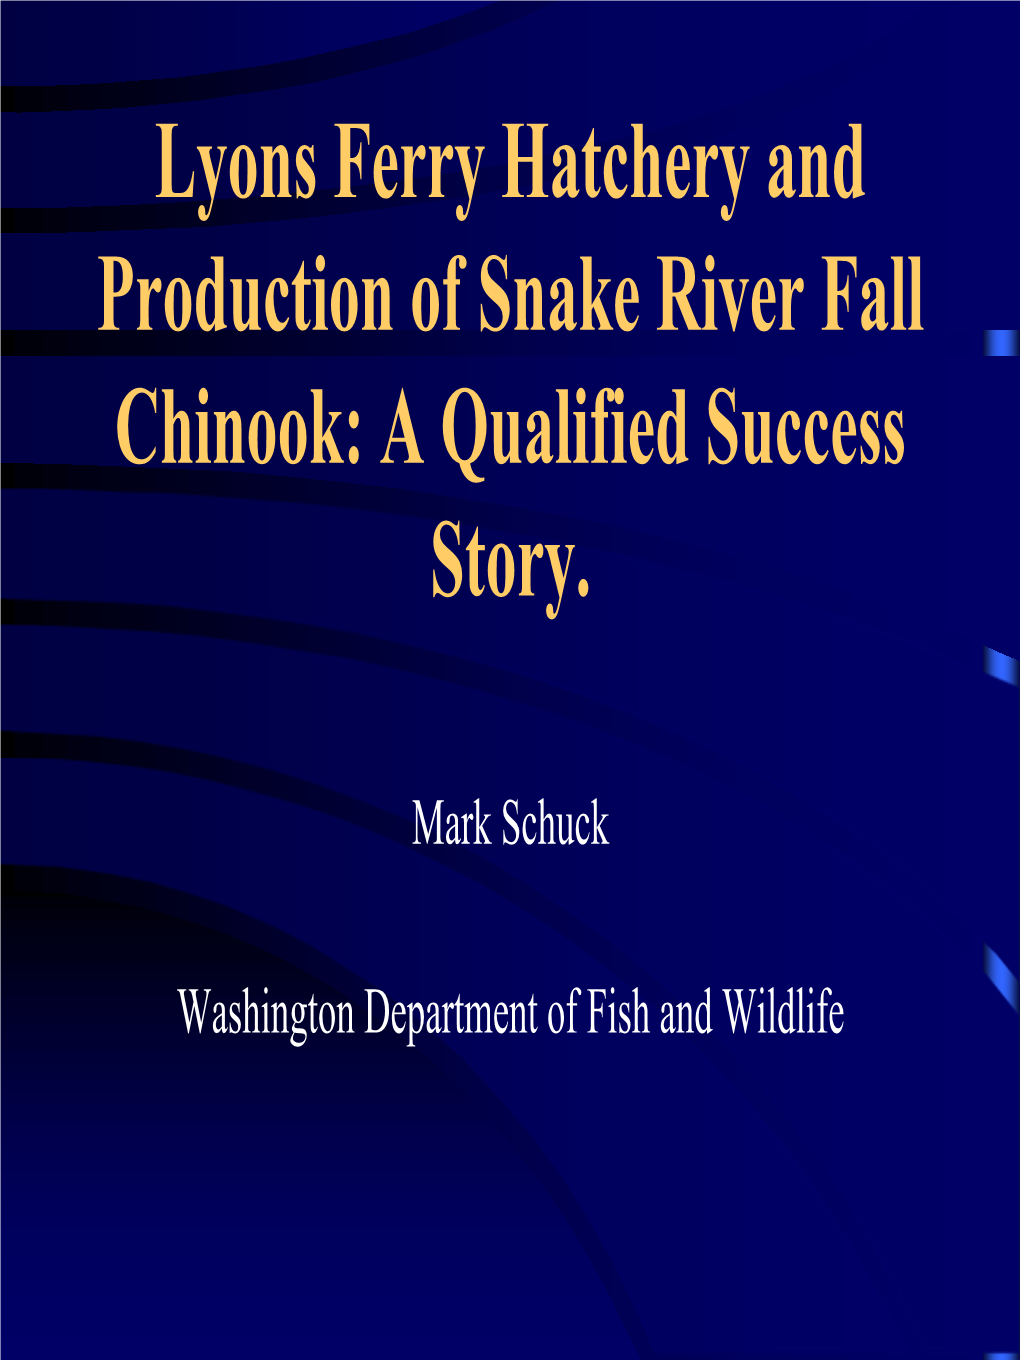 Snake River Fall Chinook Brood Origin